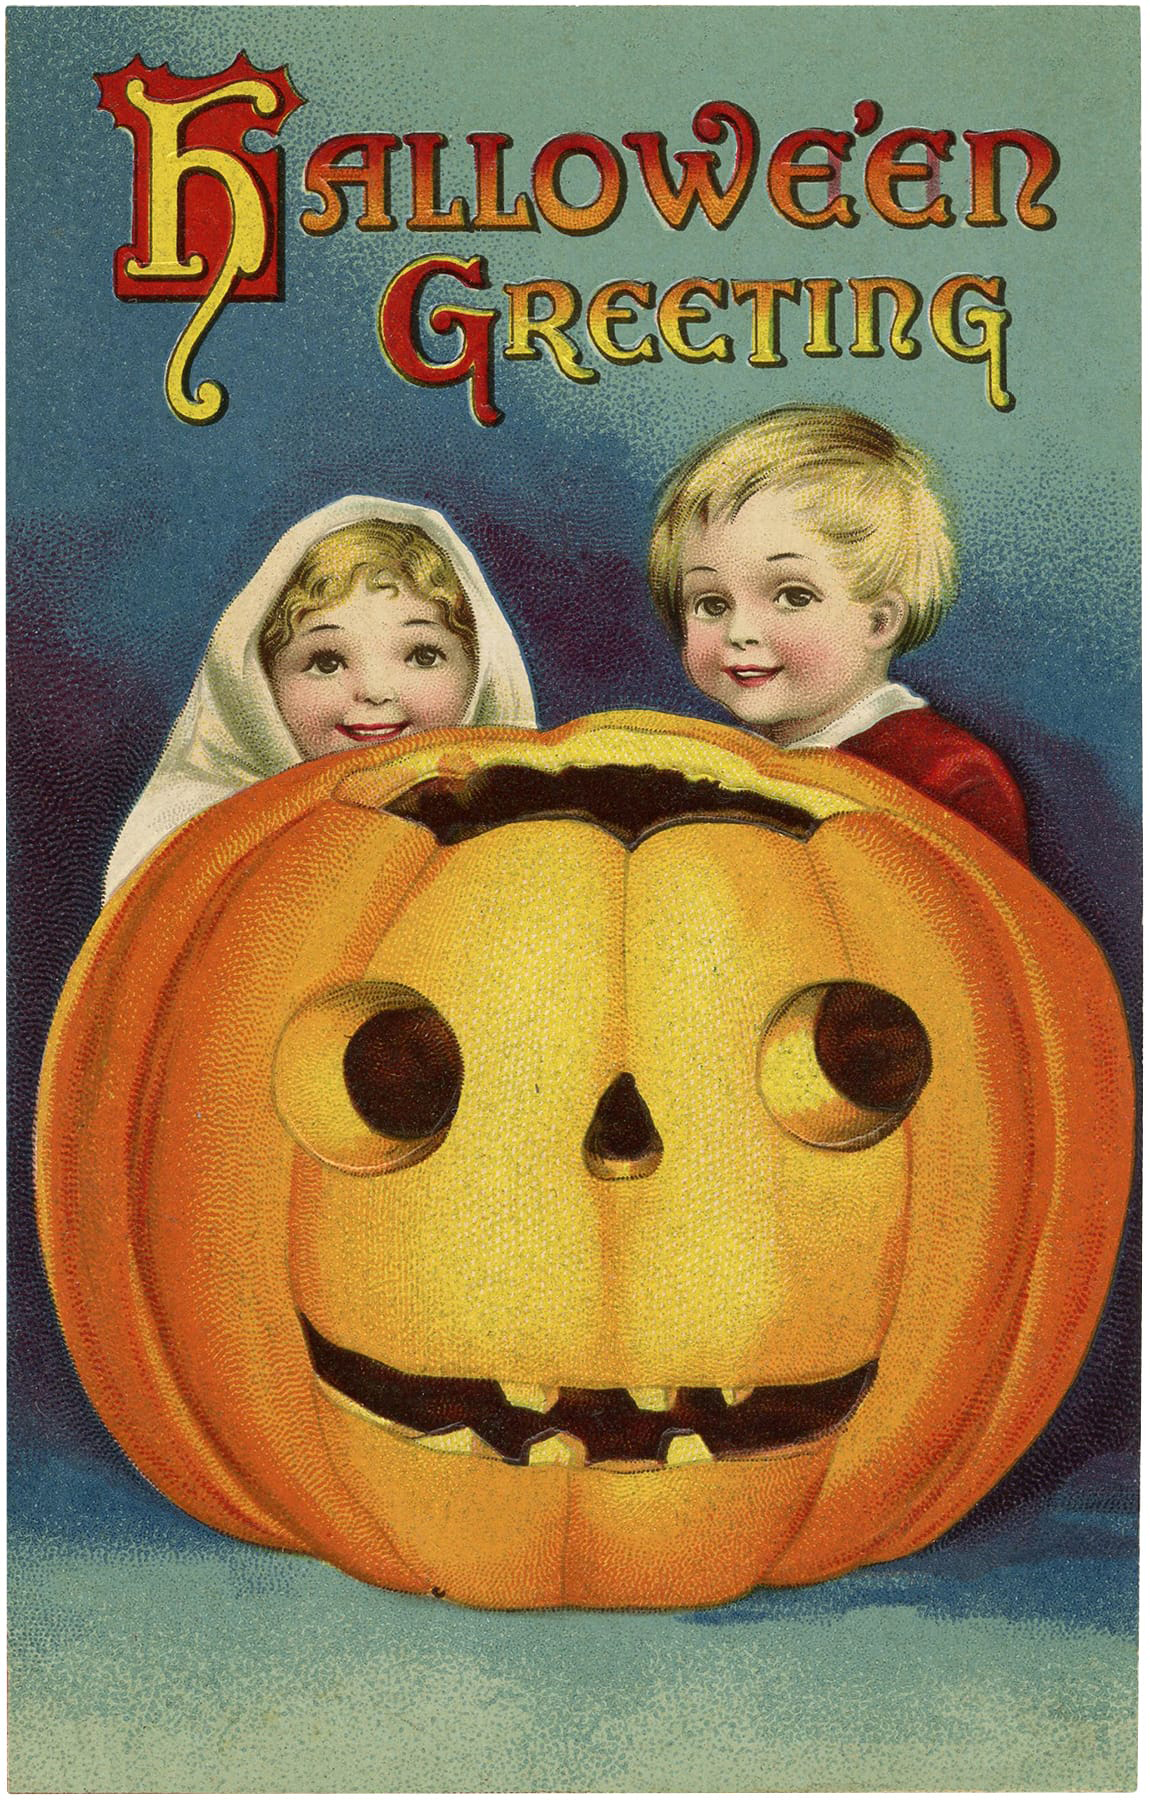 Free Vintage Halloween Image! Graphics Fairy